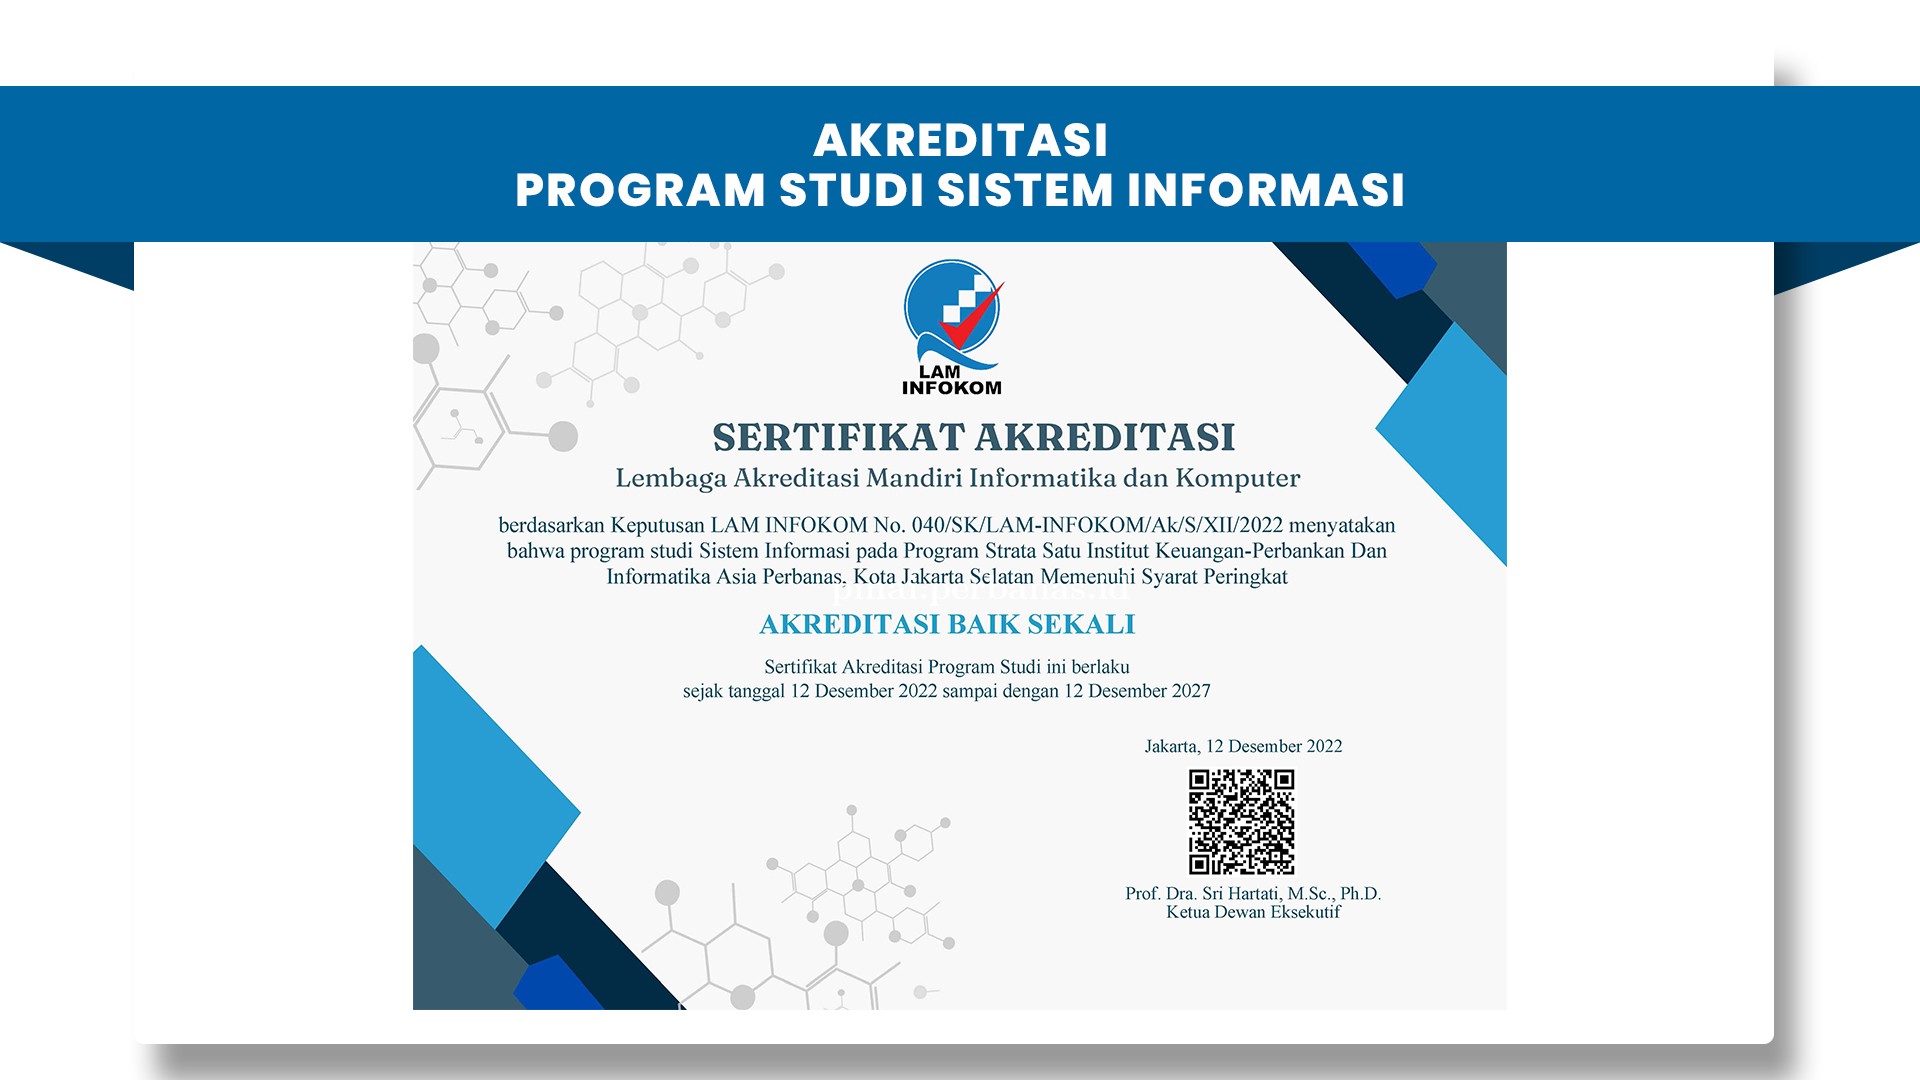 Akreditasi Program Studi Sistem Informasi